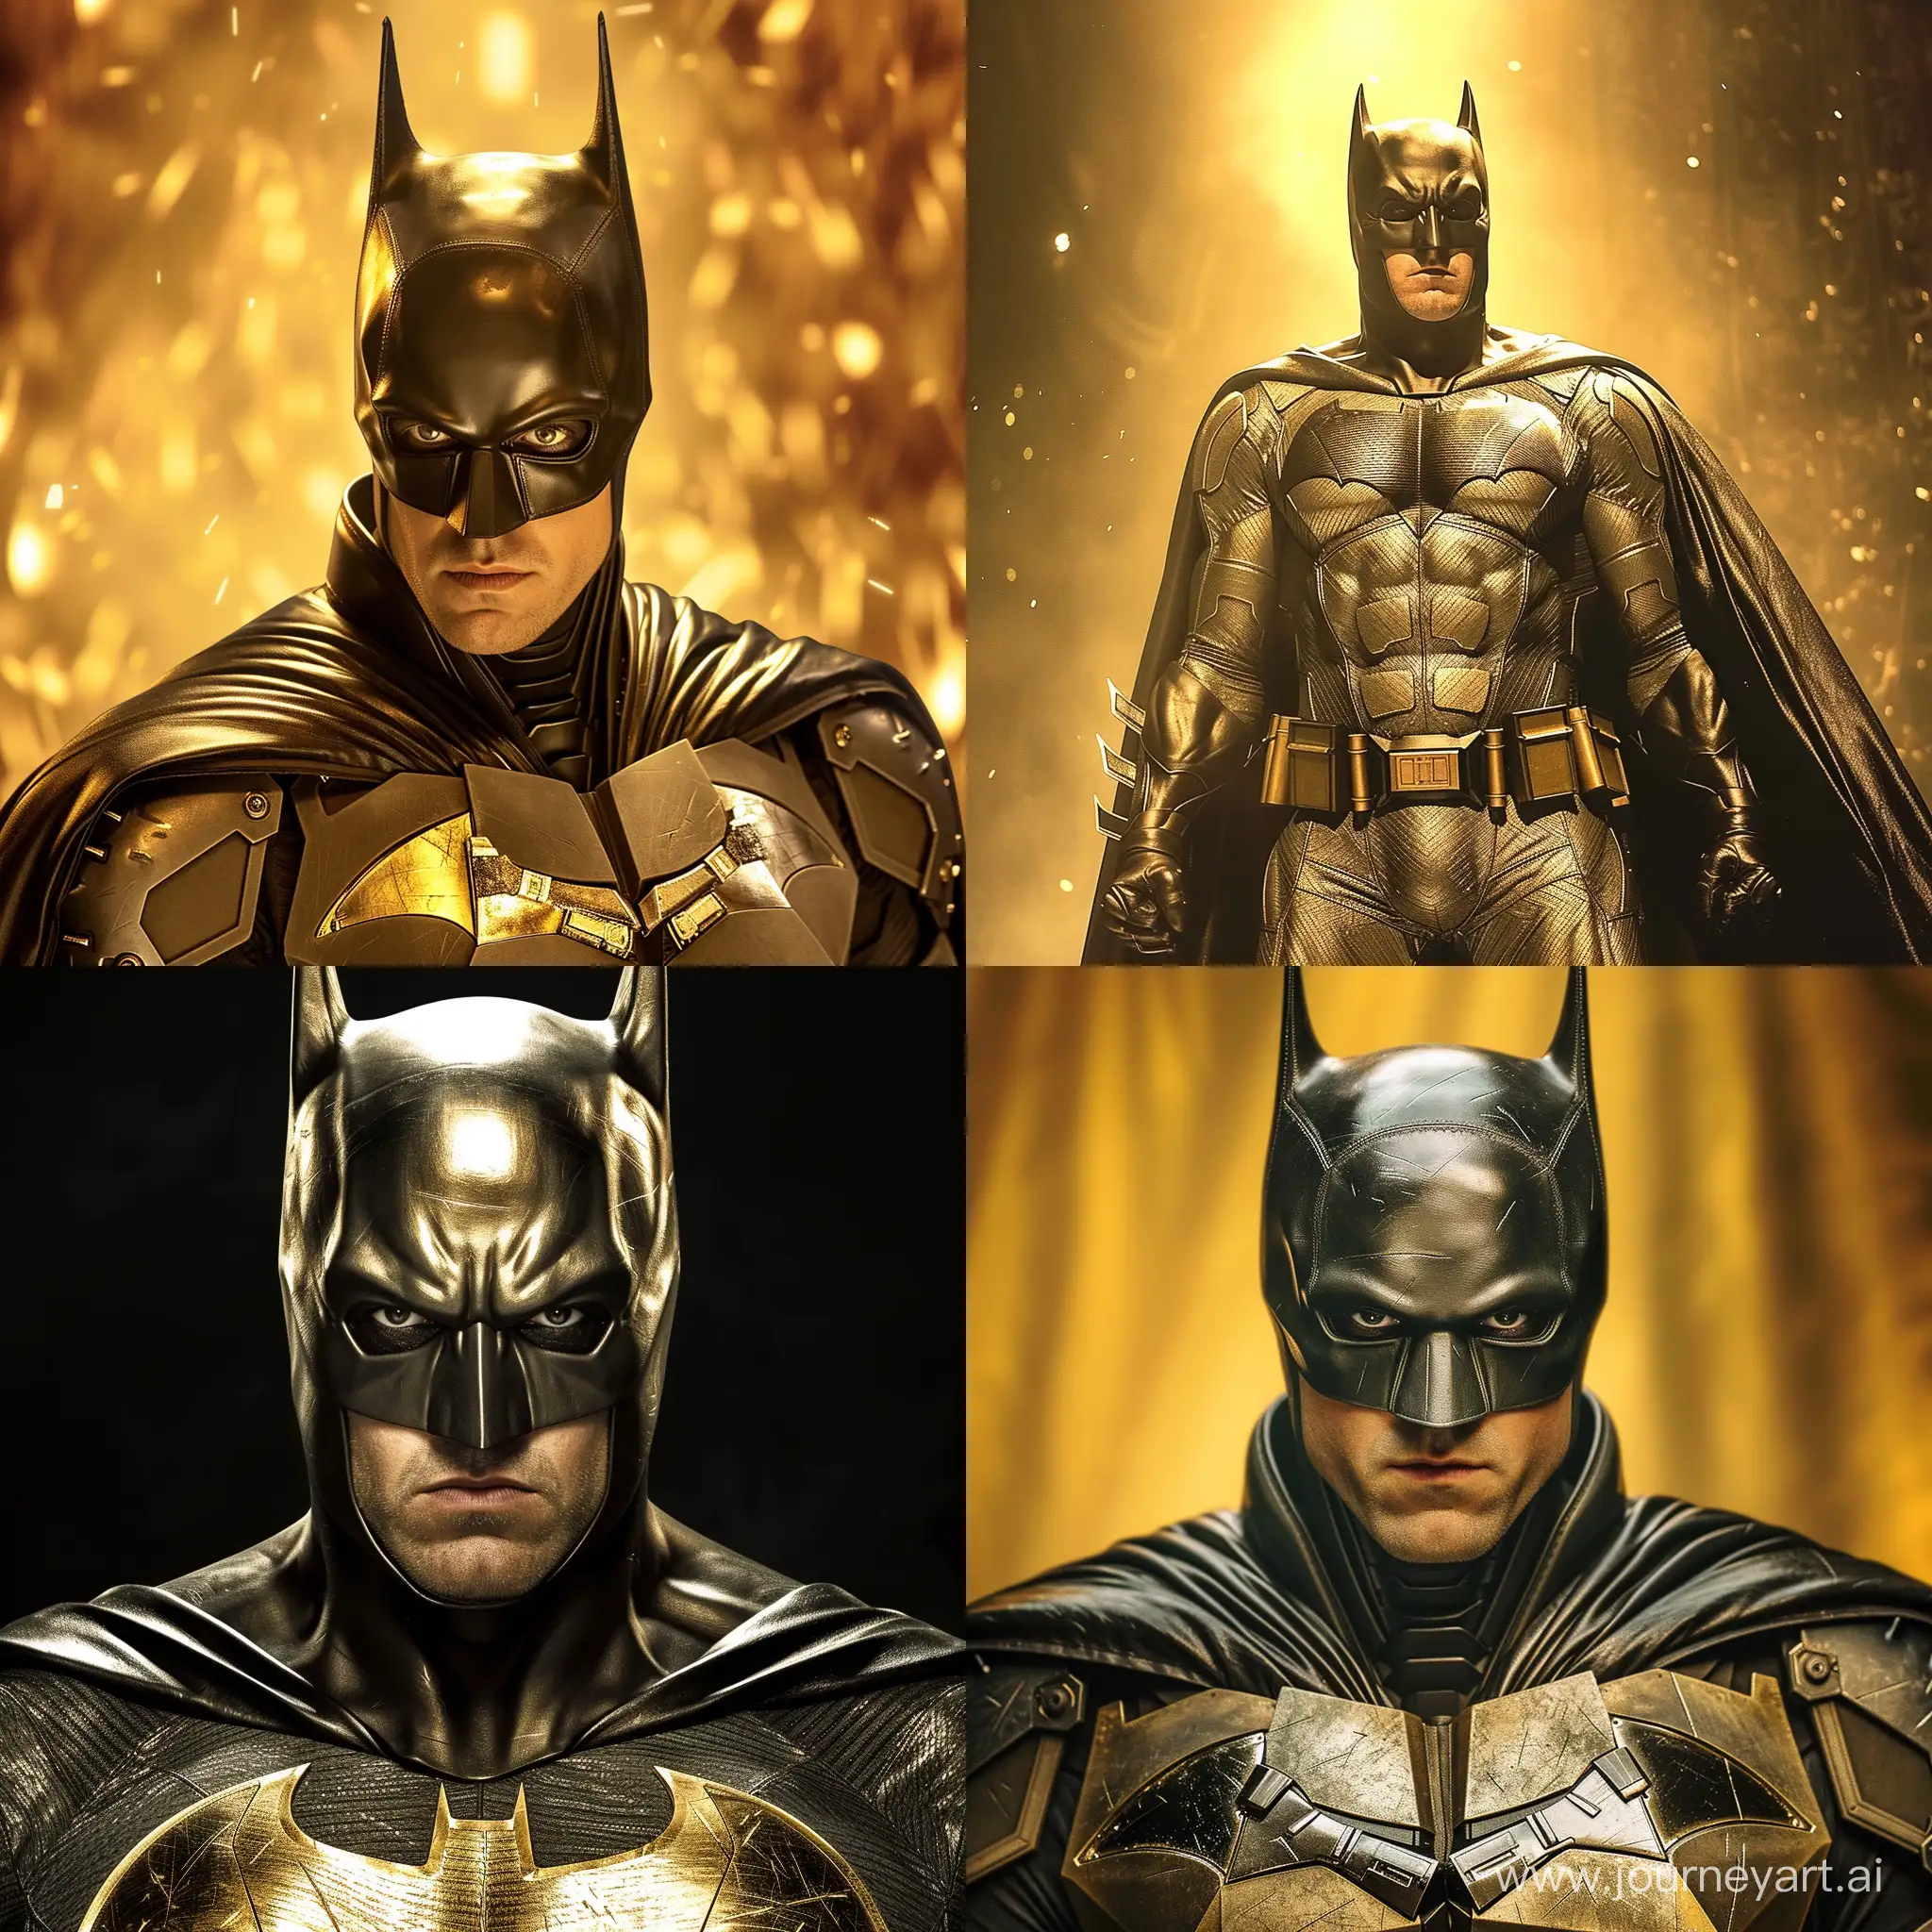 Christian-Bale-Portraying-Batman-in-Majestic-Gold-Costume